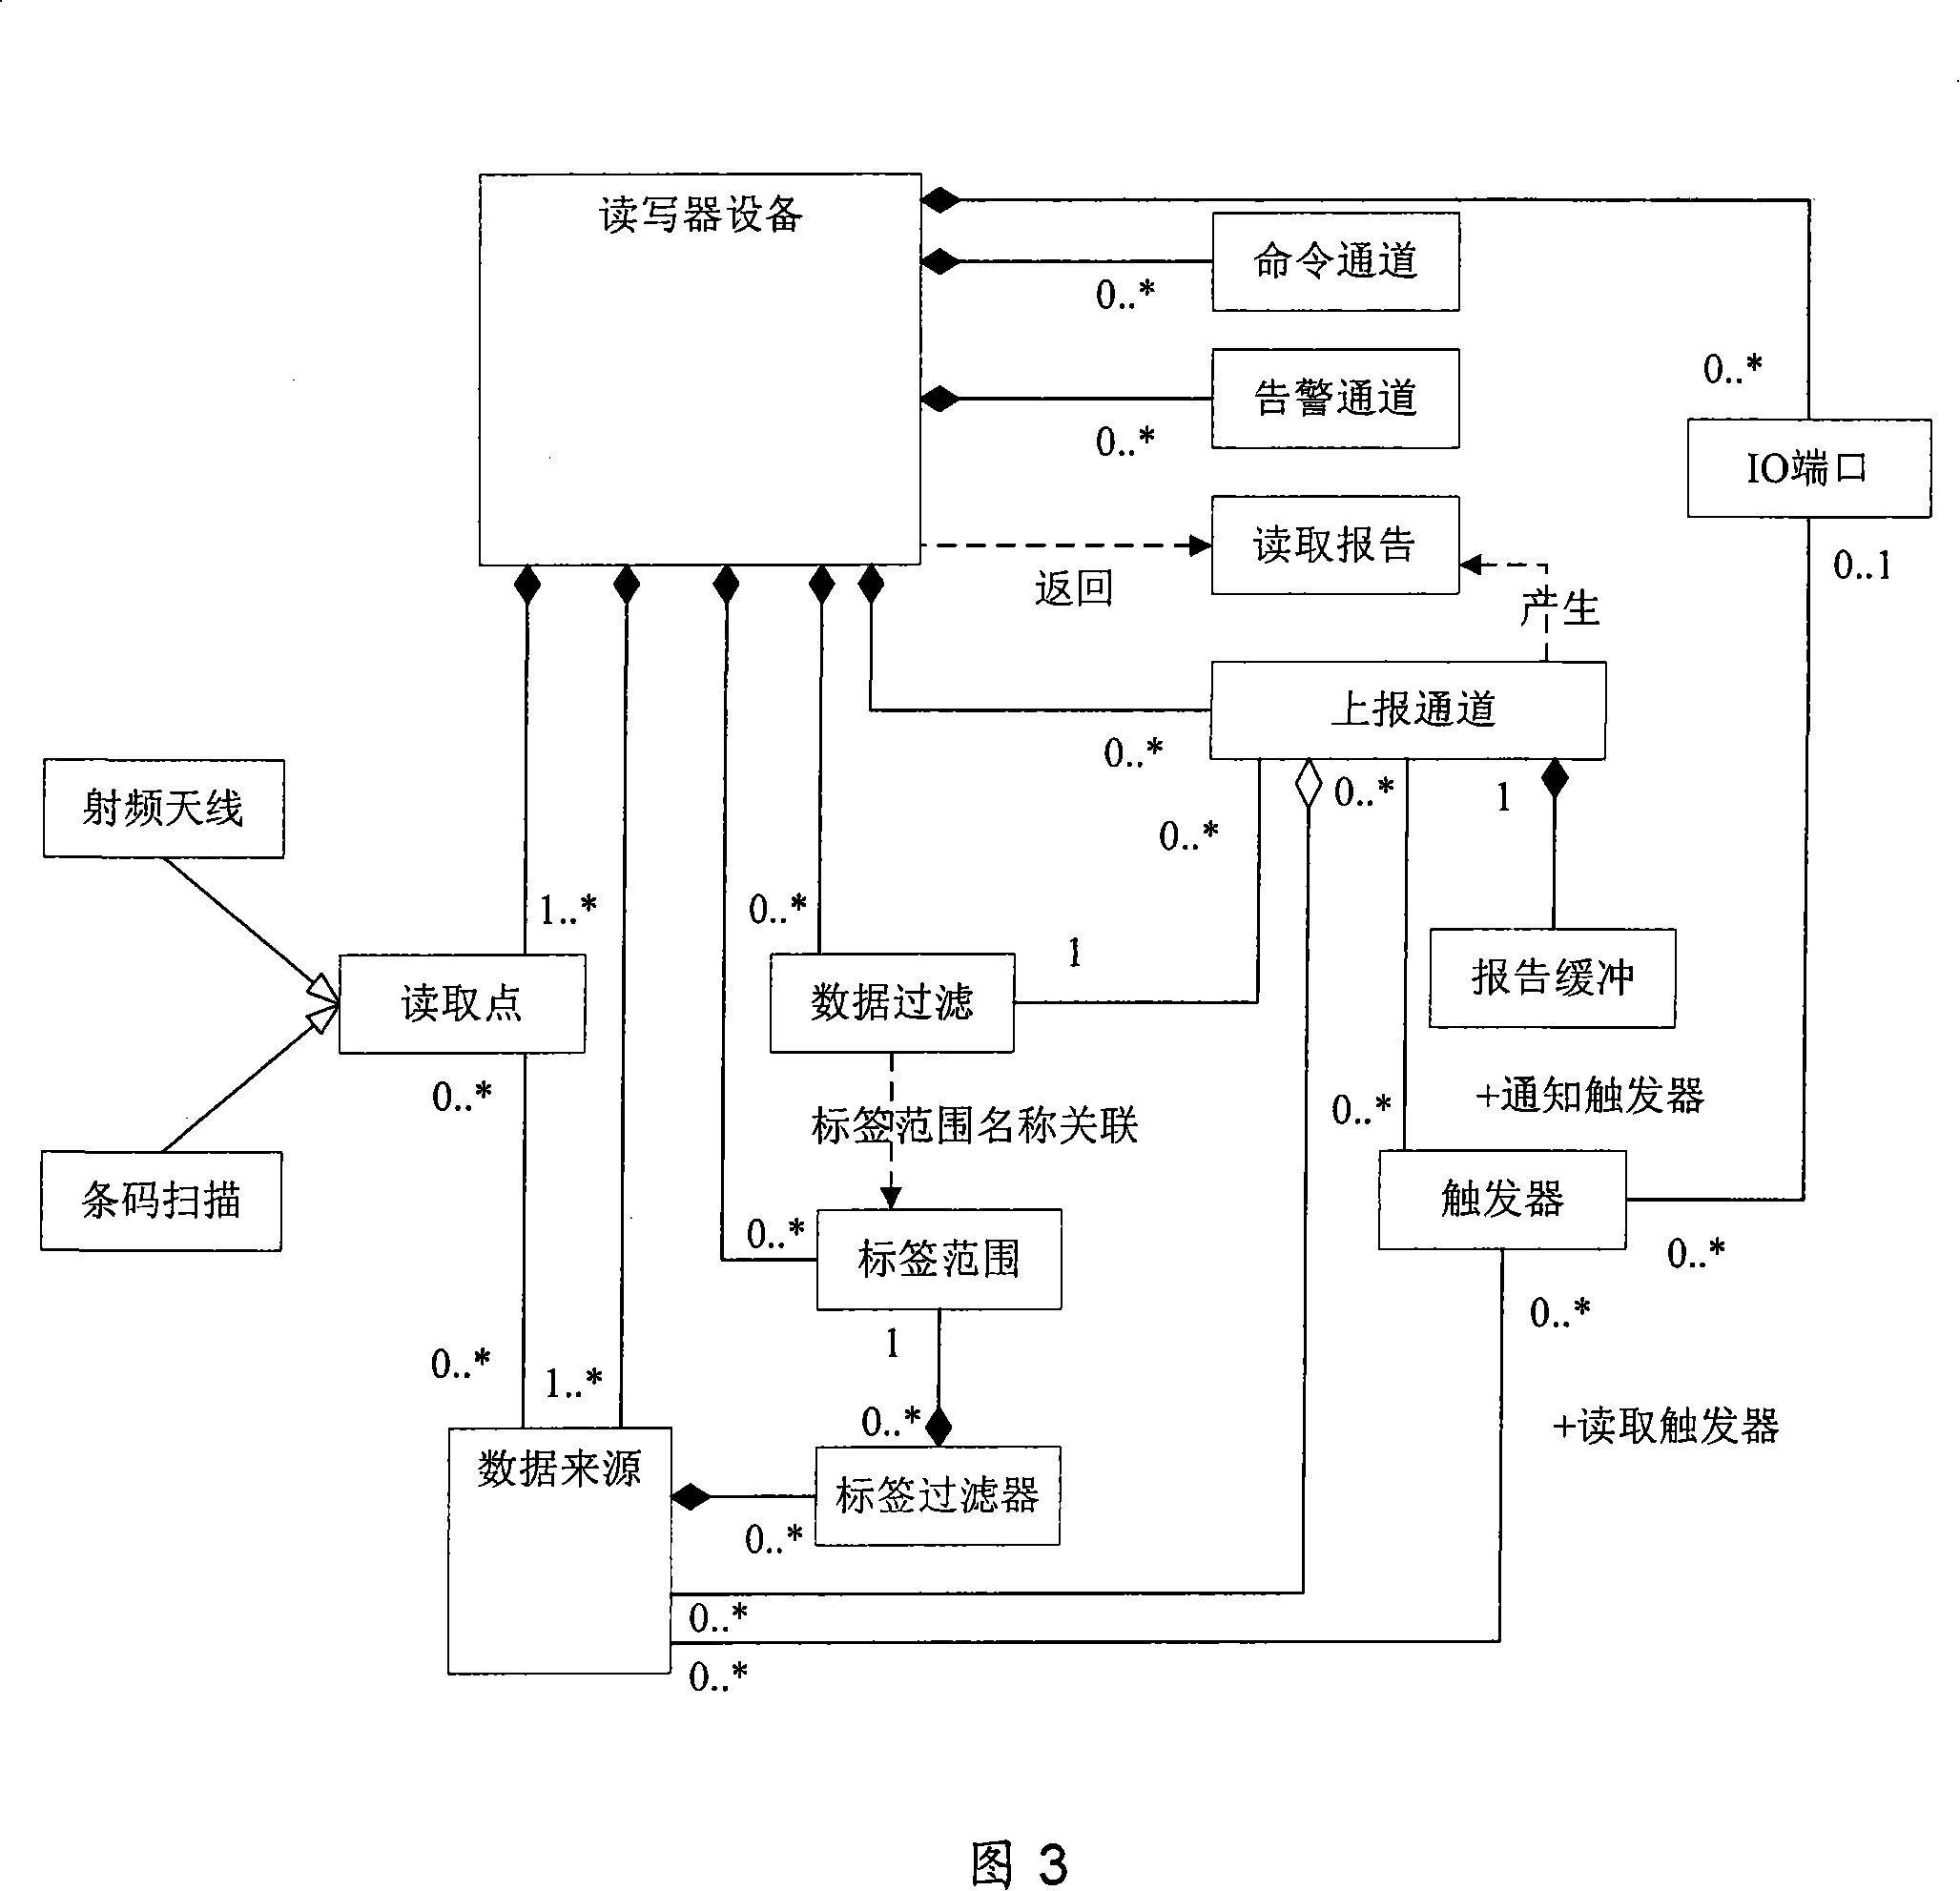 Universal read-write machine communicating protocol based on EPC read-write machine specification